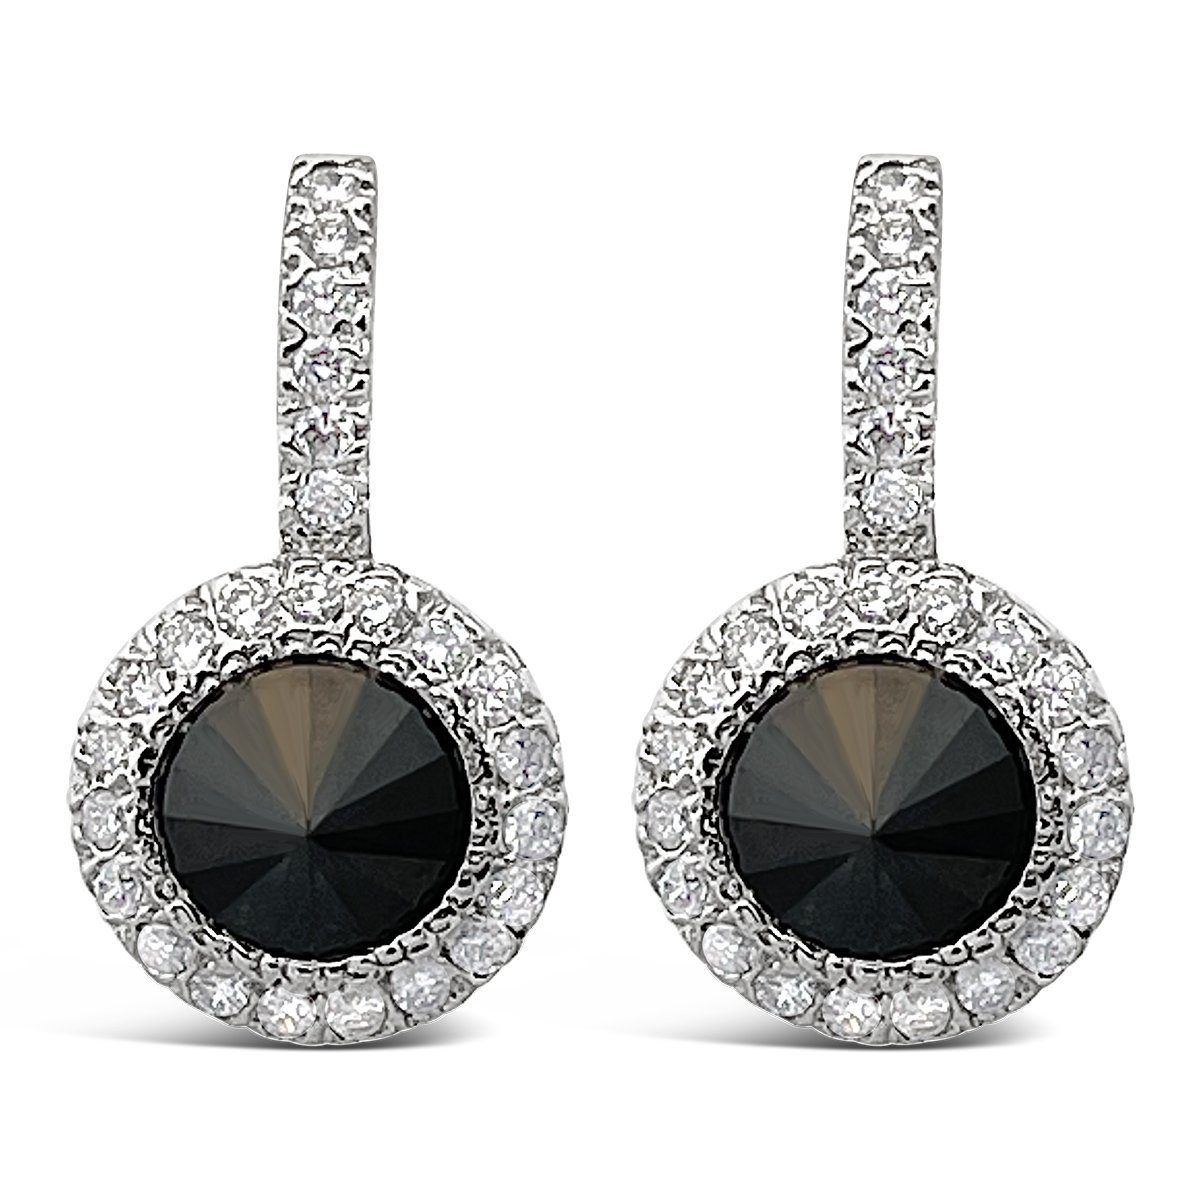 Details more than 249 diamond drop earrings super hot